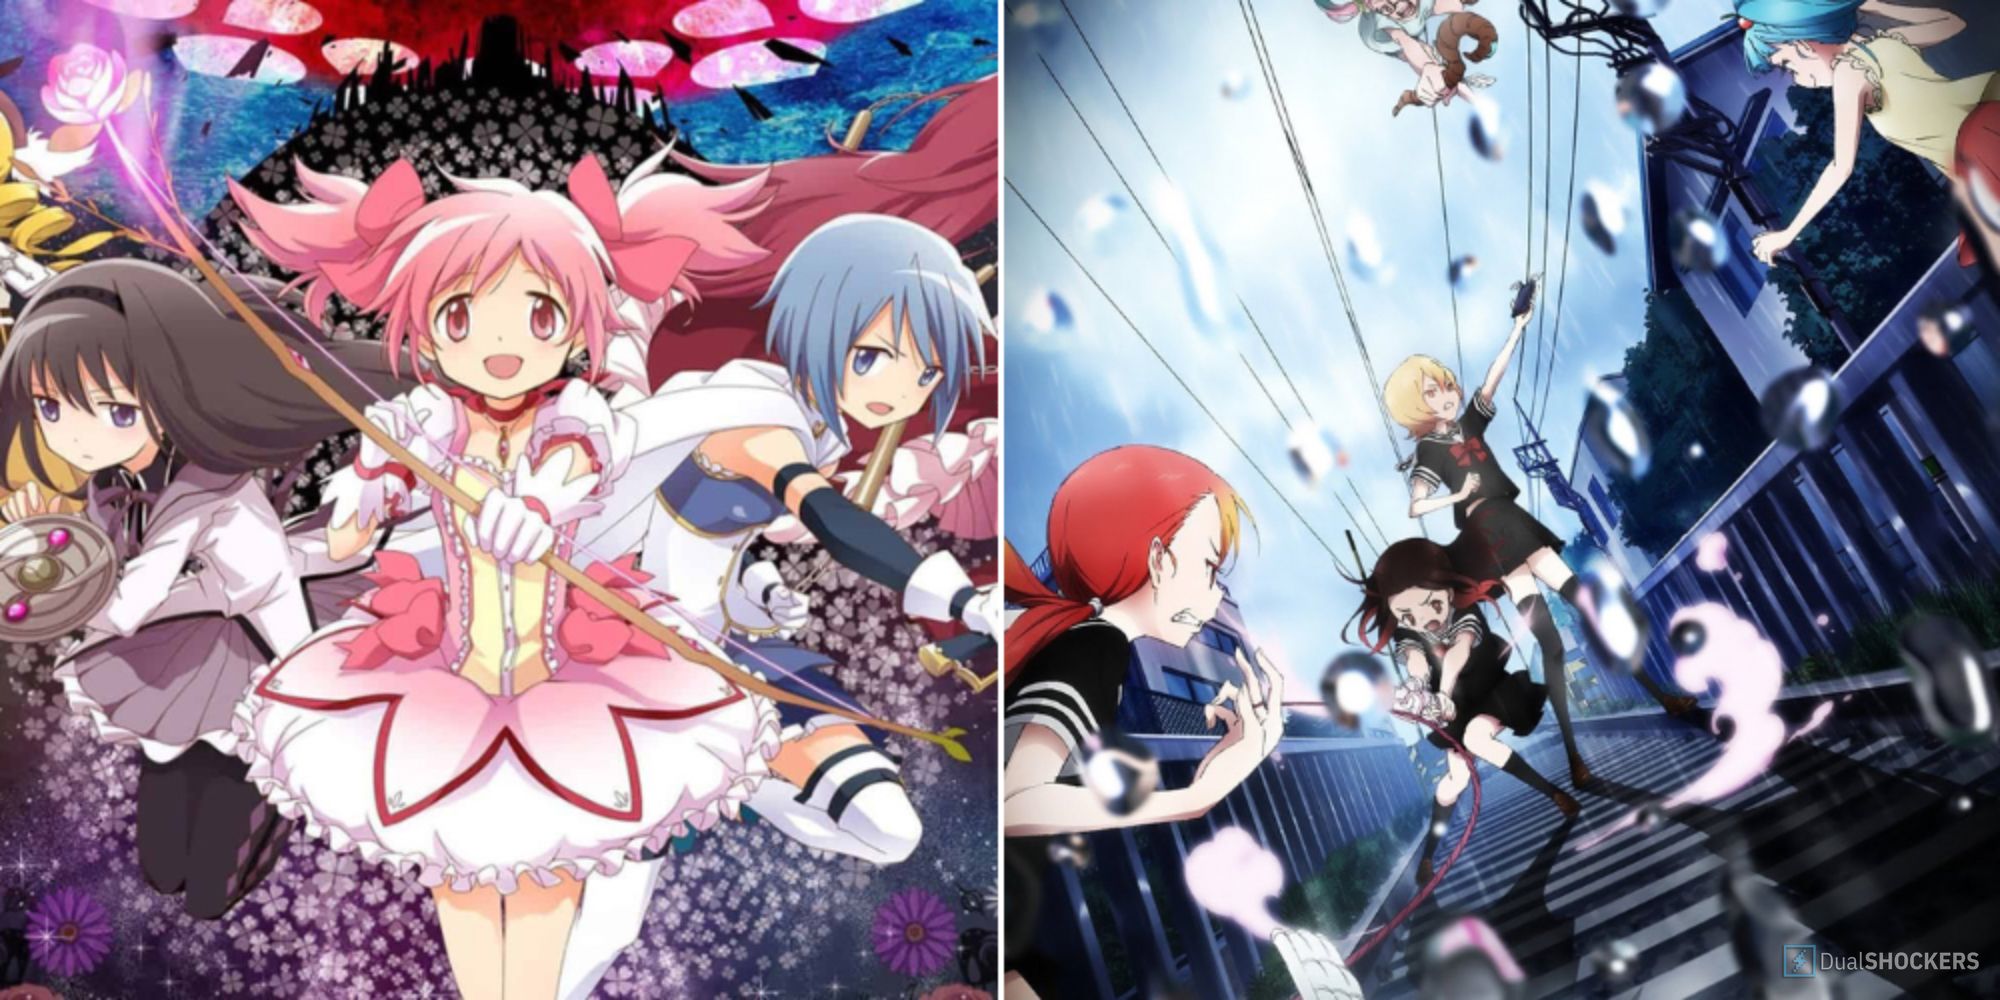 Dark New Romance Anime Completely Flips Gender Roles On Their Head